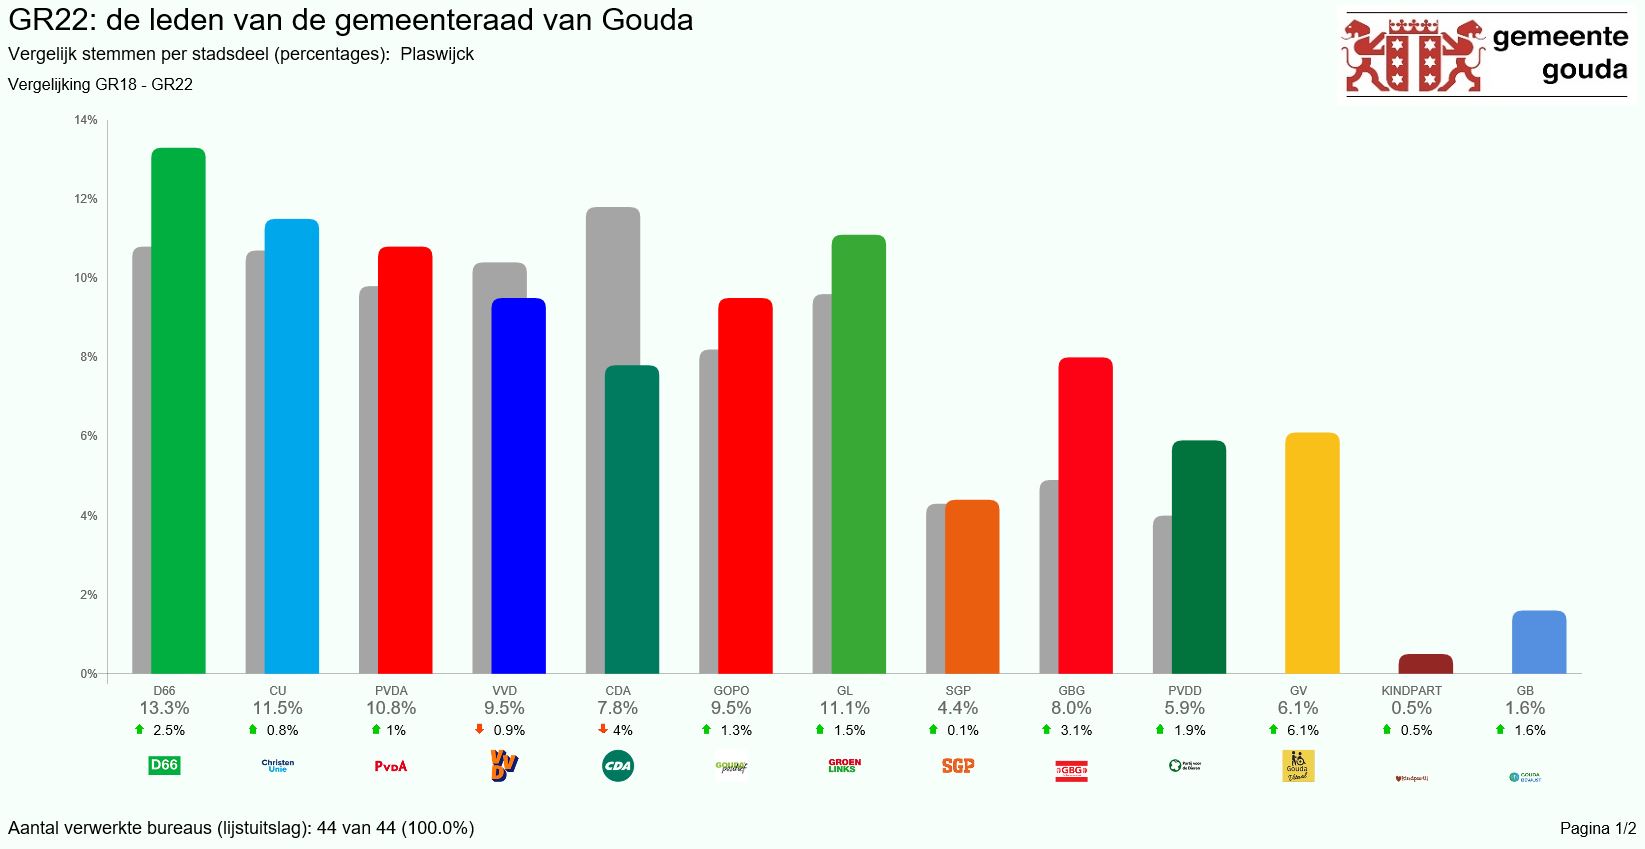 Vergelijking stemmen per partij percentages Plaswijck